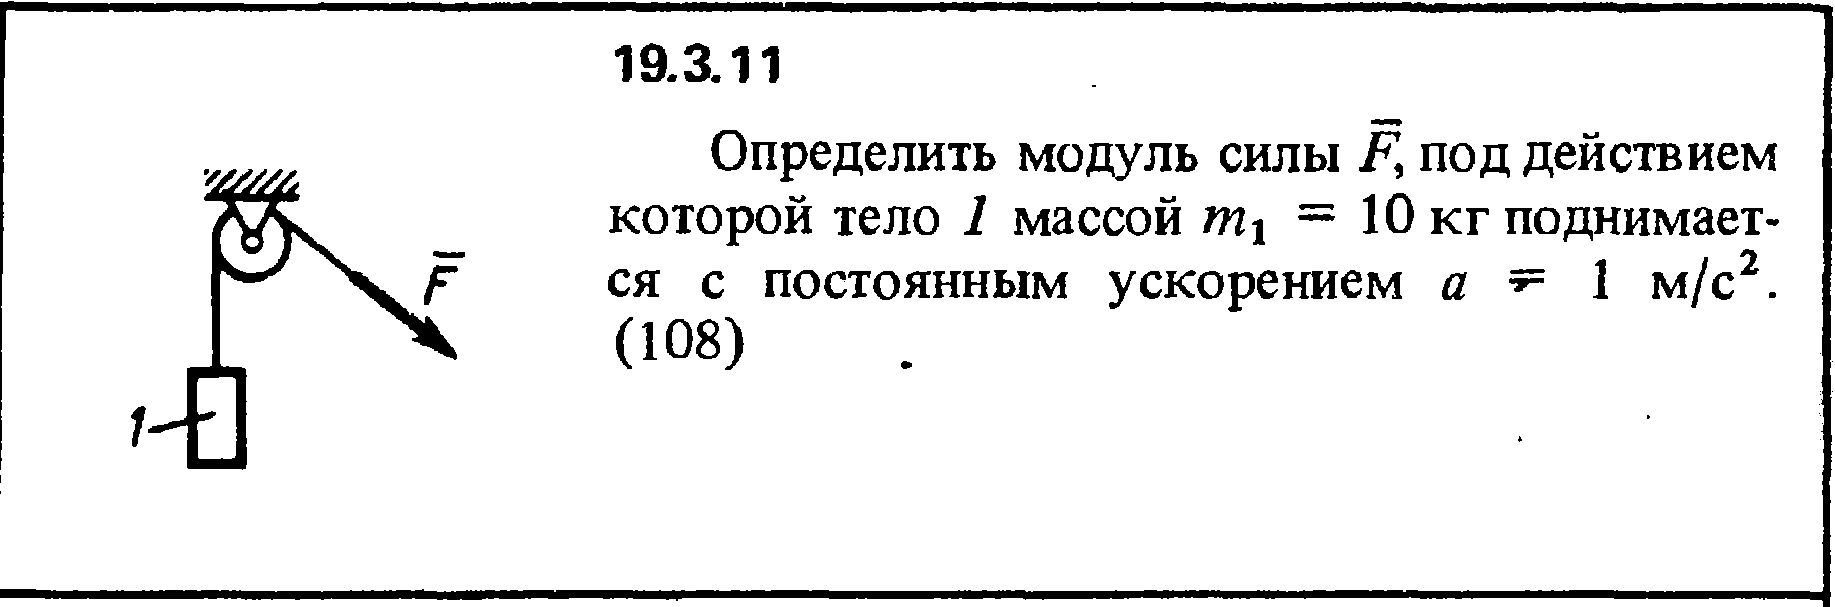 Решение 19.3.11 из сборника (решебника) Кепе О.Е. 1989